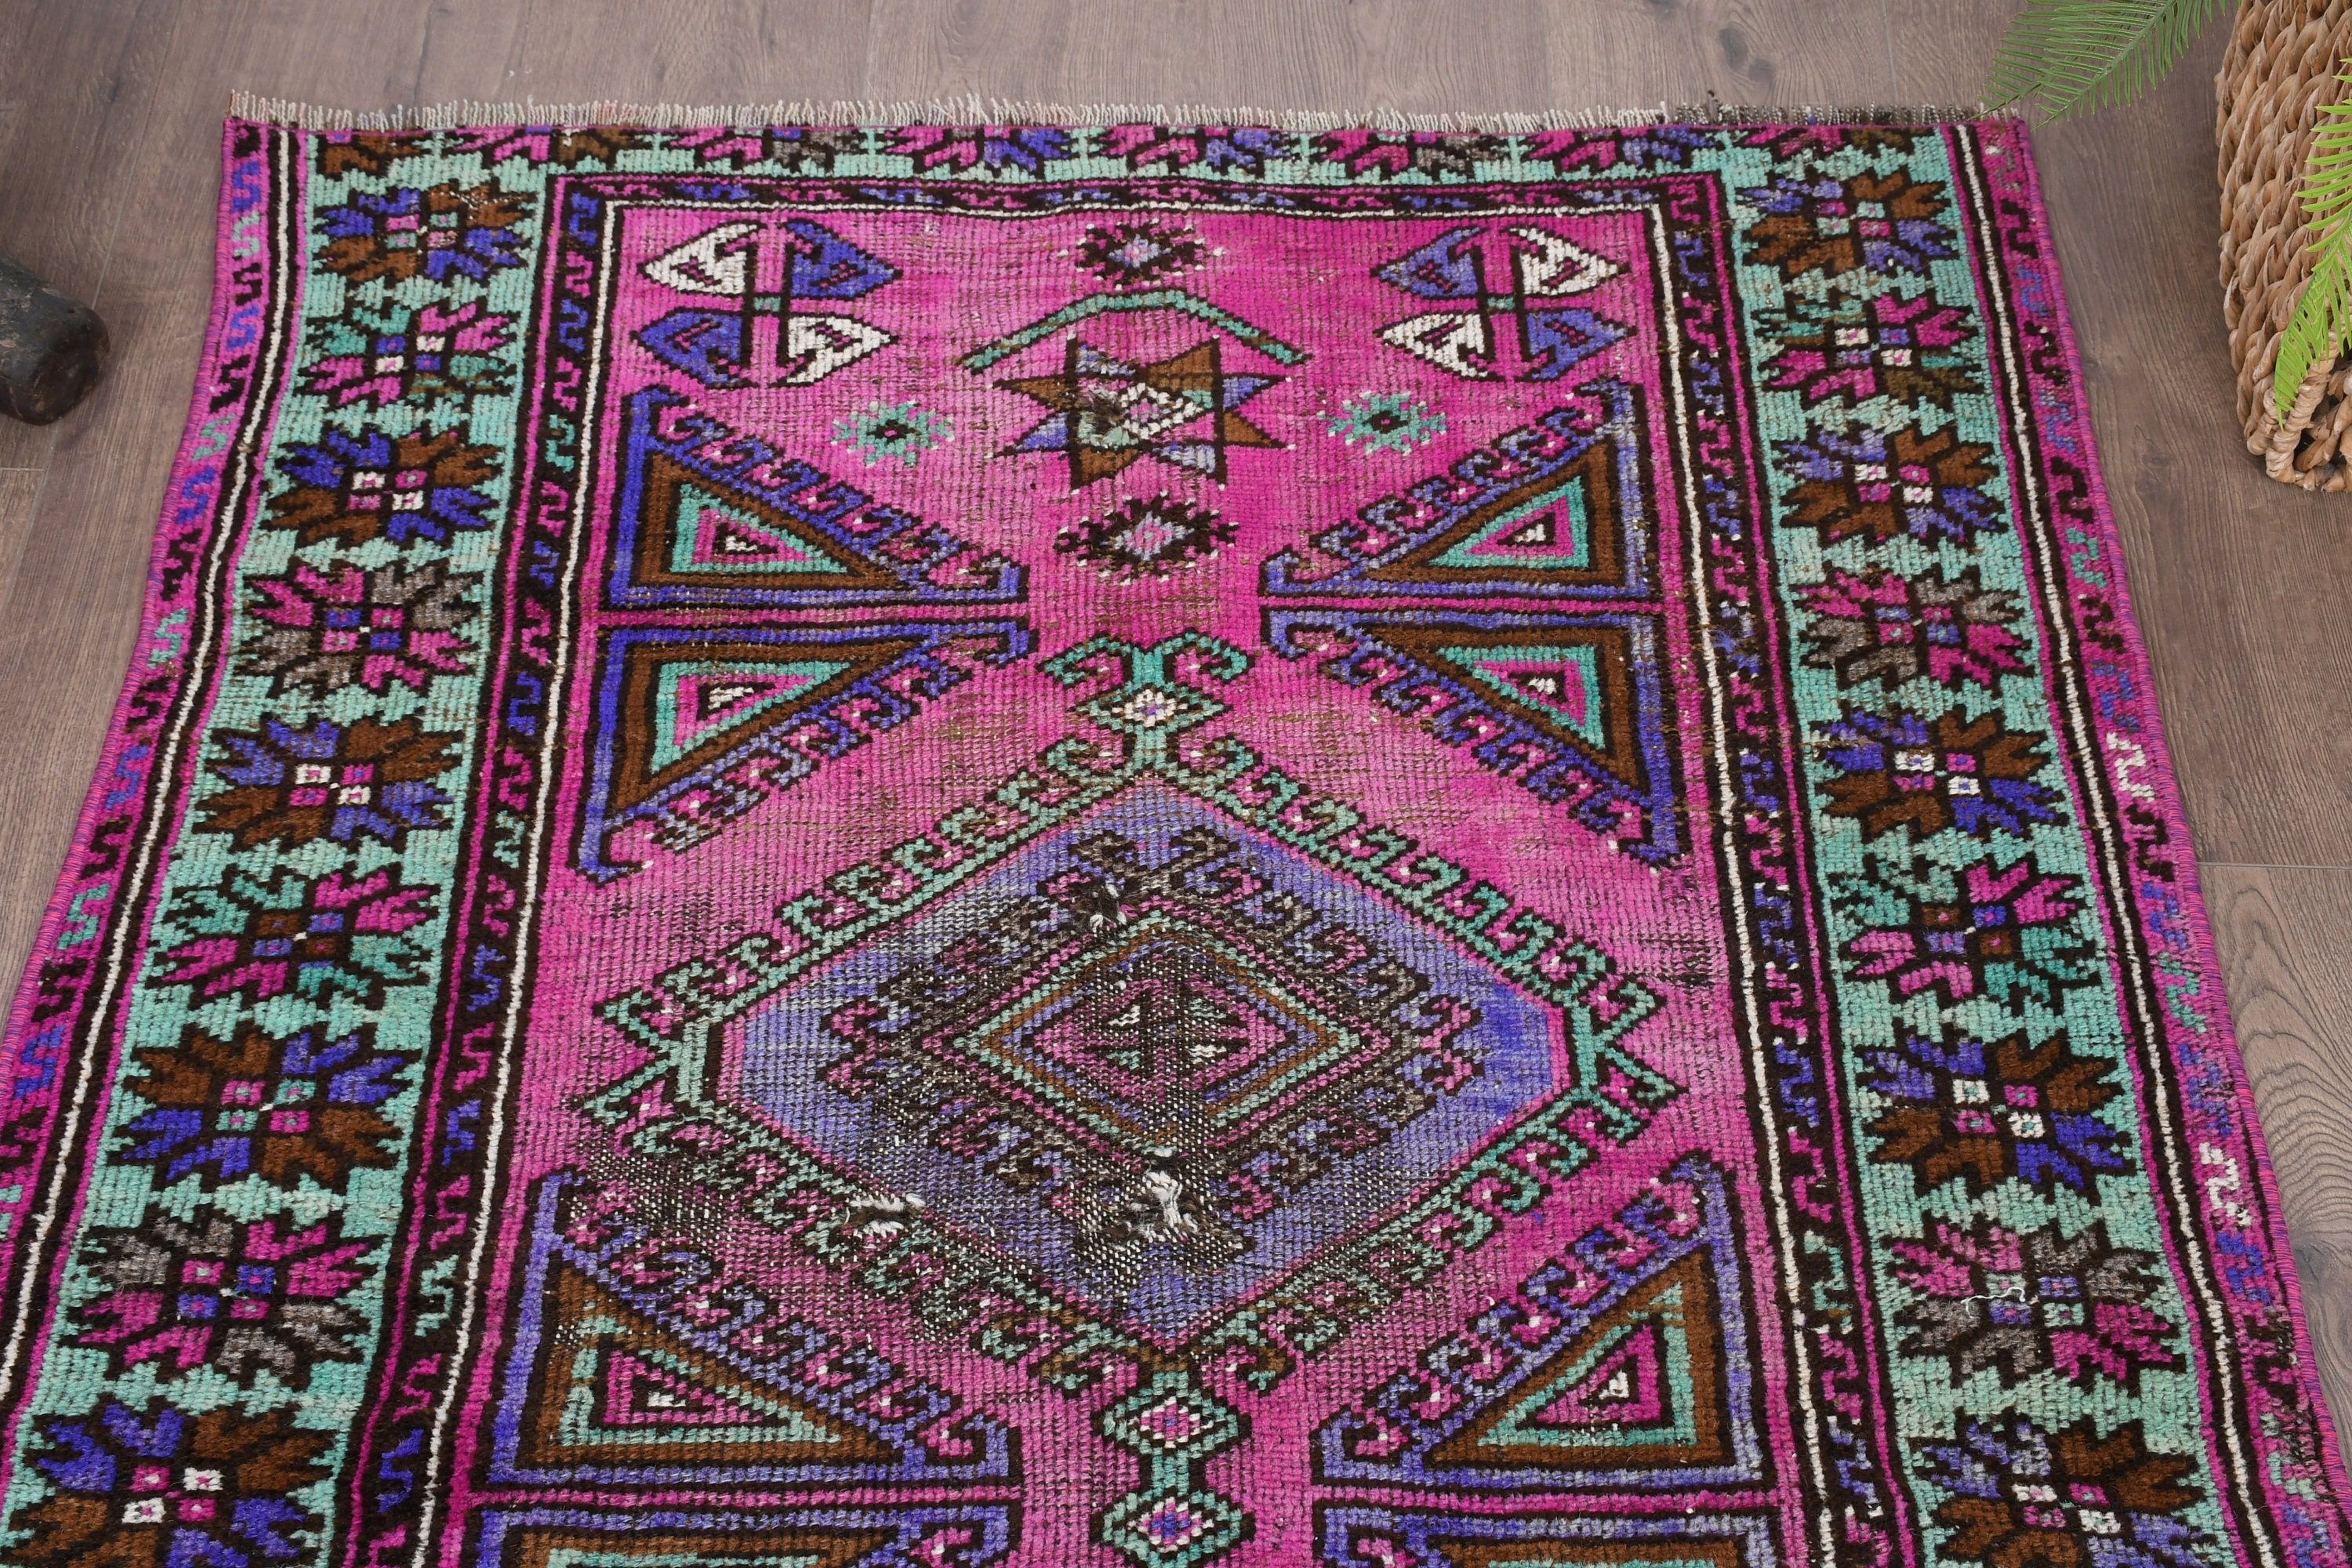 Custom Rug, Vintage Rug, Home Decor Rug, Pink Oriental Rug, Bedroom Rug, Floor Rug, Kitchen Rugs, 3.2x5.1 ft Accent Rug, Turkish Rugs